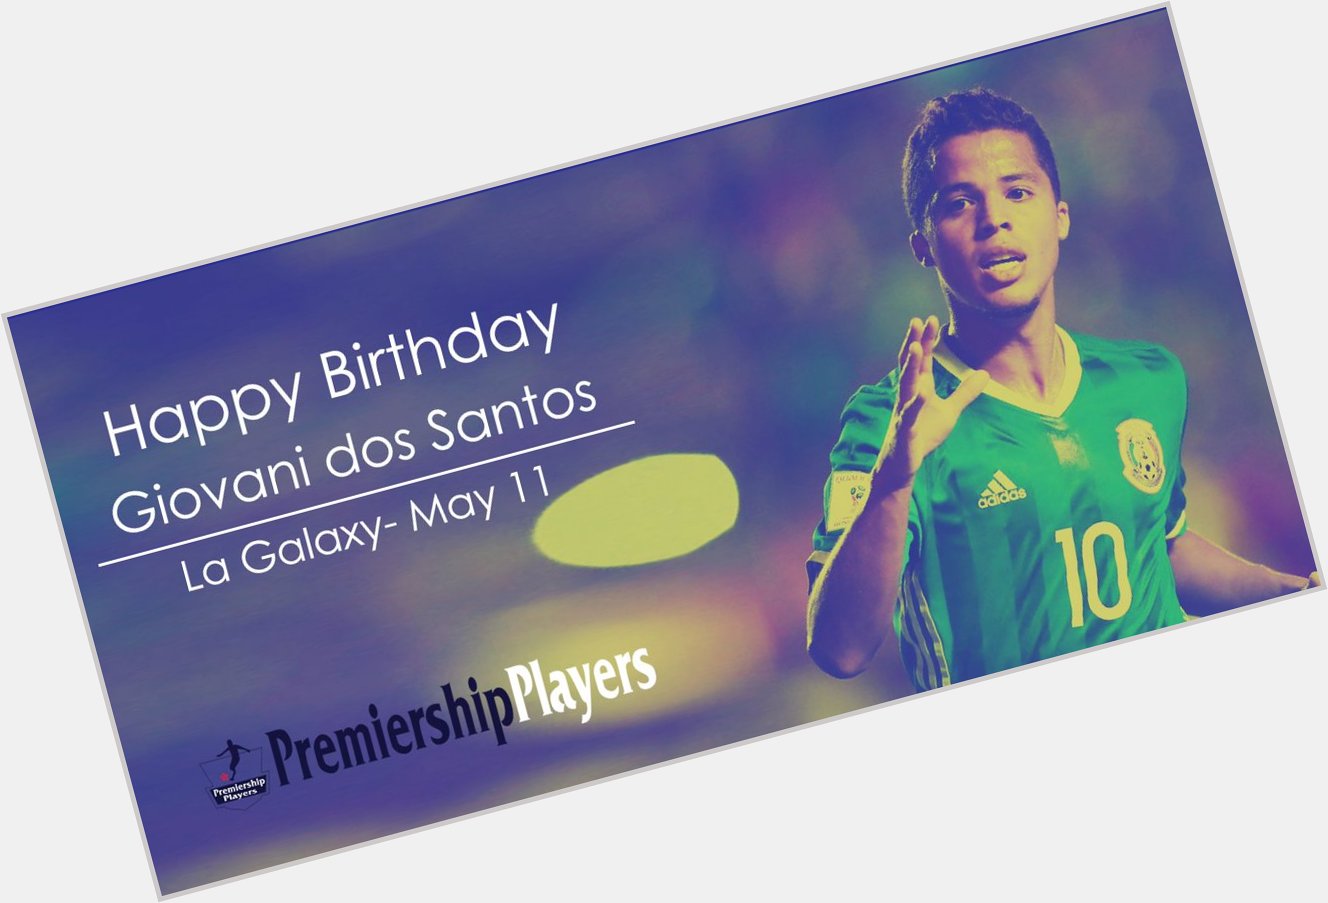 Happy Birthday from The Premiership Players Magazine - Kuwait 
Giovani dos Santos
La Galaxy- May 11 